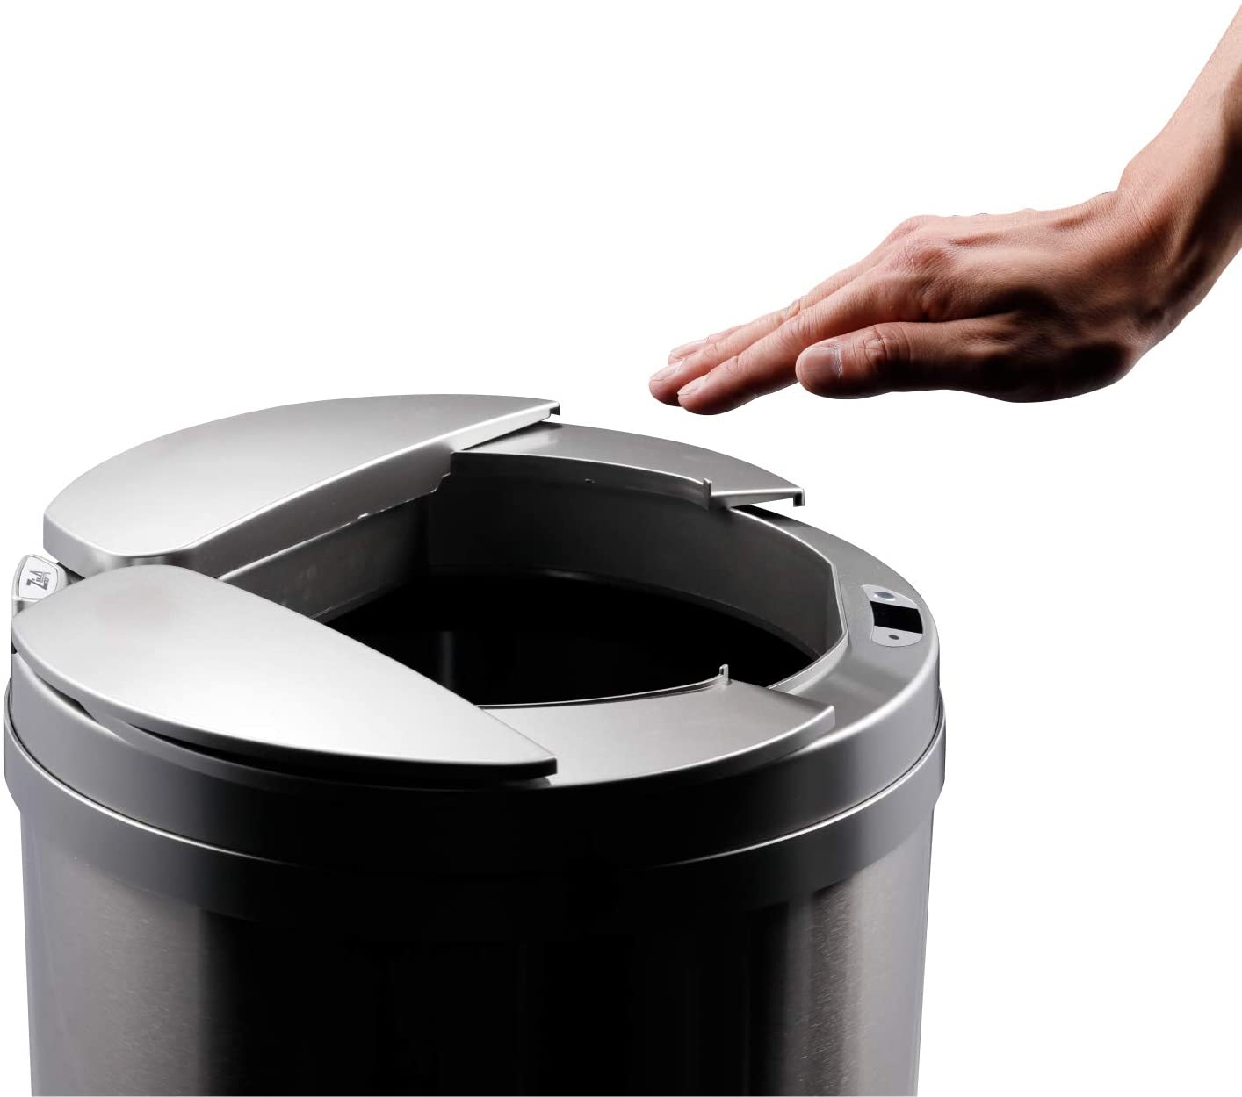 ZitA(ジータ) 自動ゴミ箱 【ひらけ、ゴミ箱】の商品画像1 